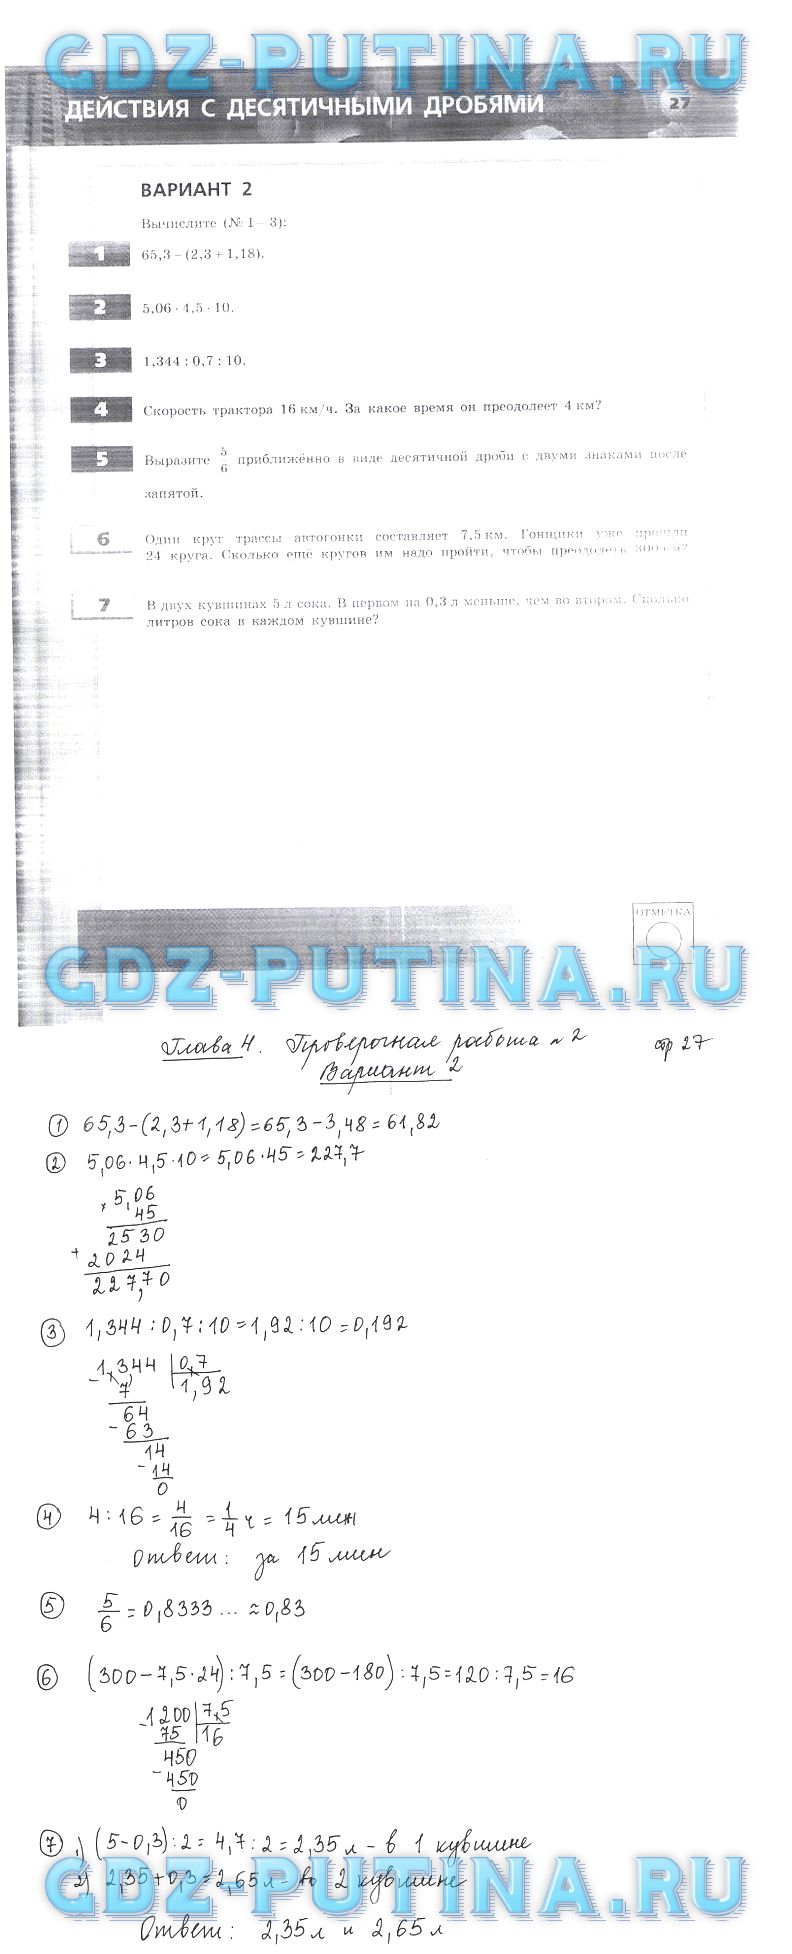 гдз 6 класс тетрадь-экзаменатор страница 27 математика Кузнецова